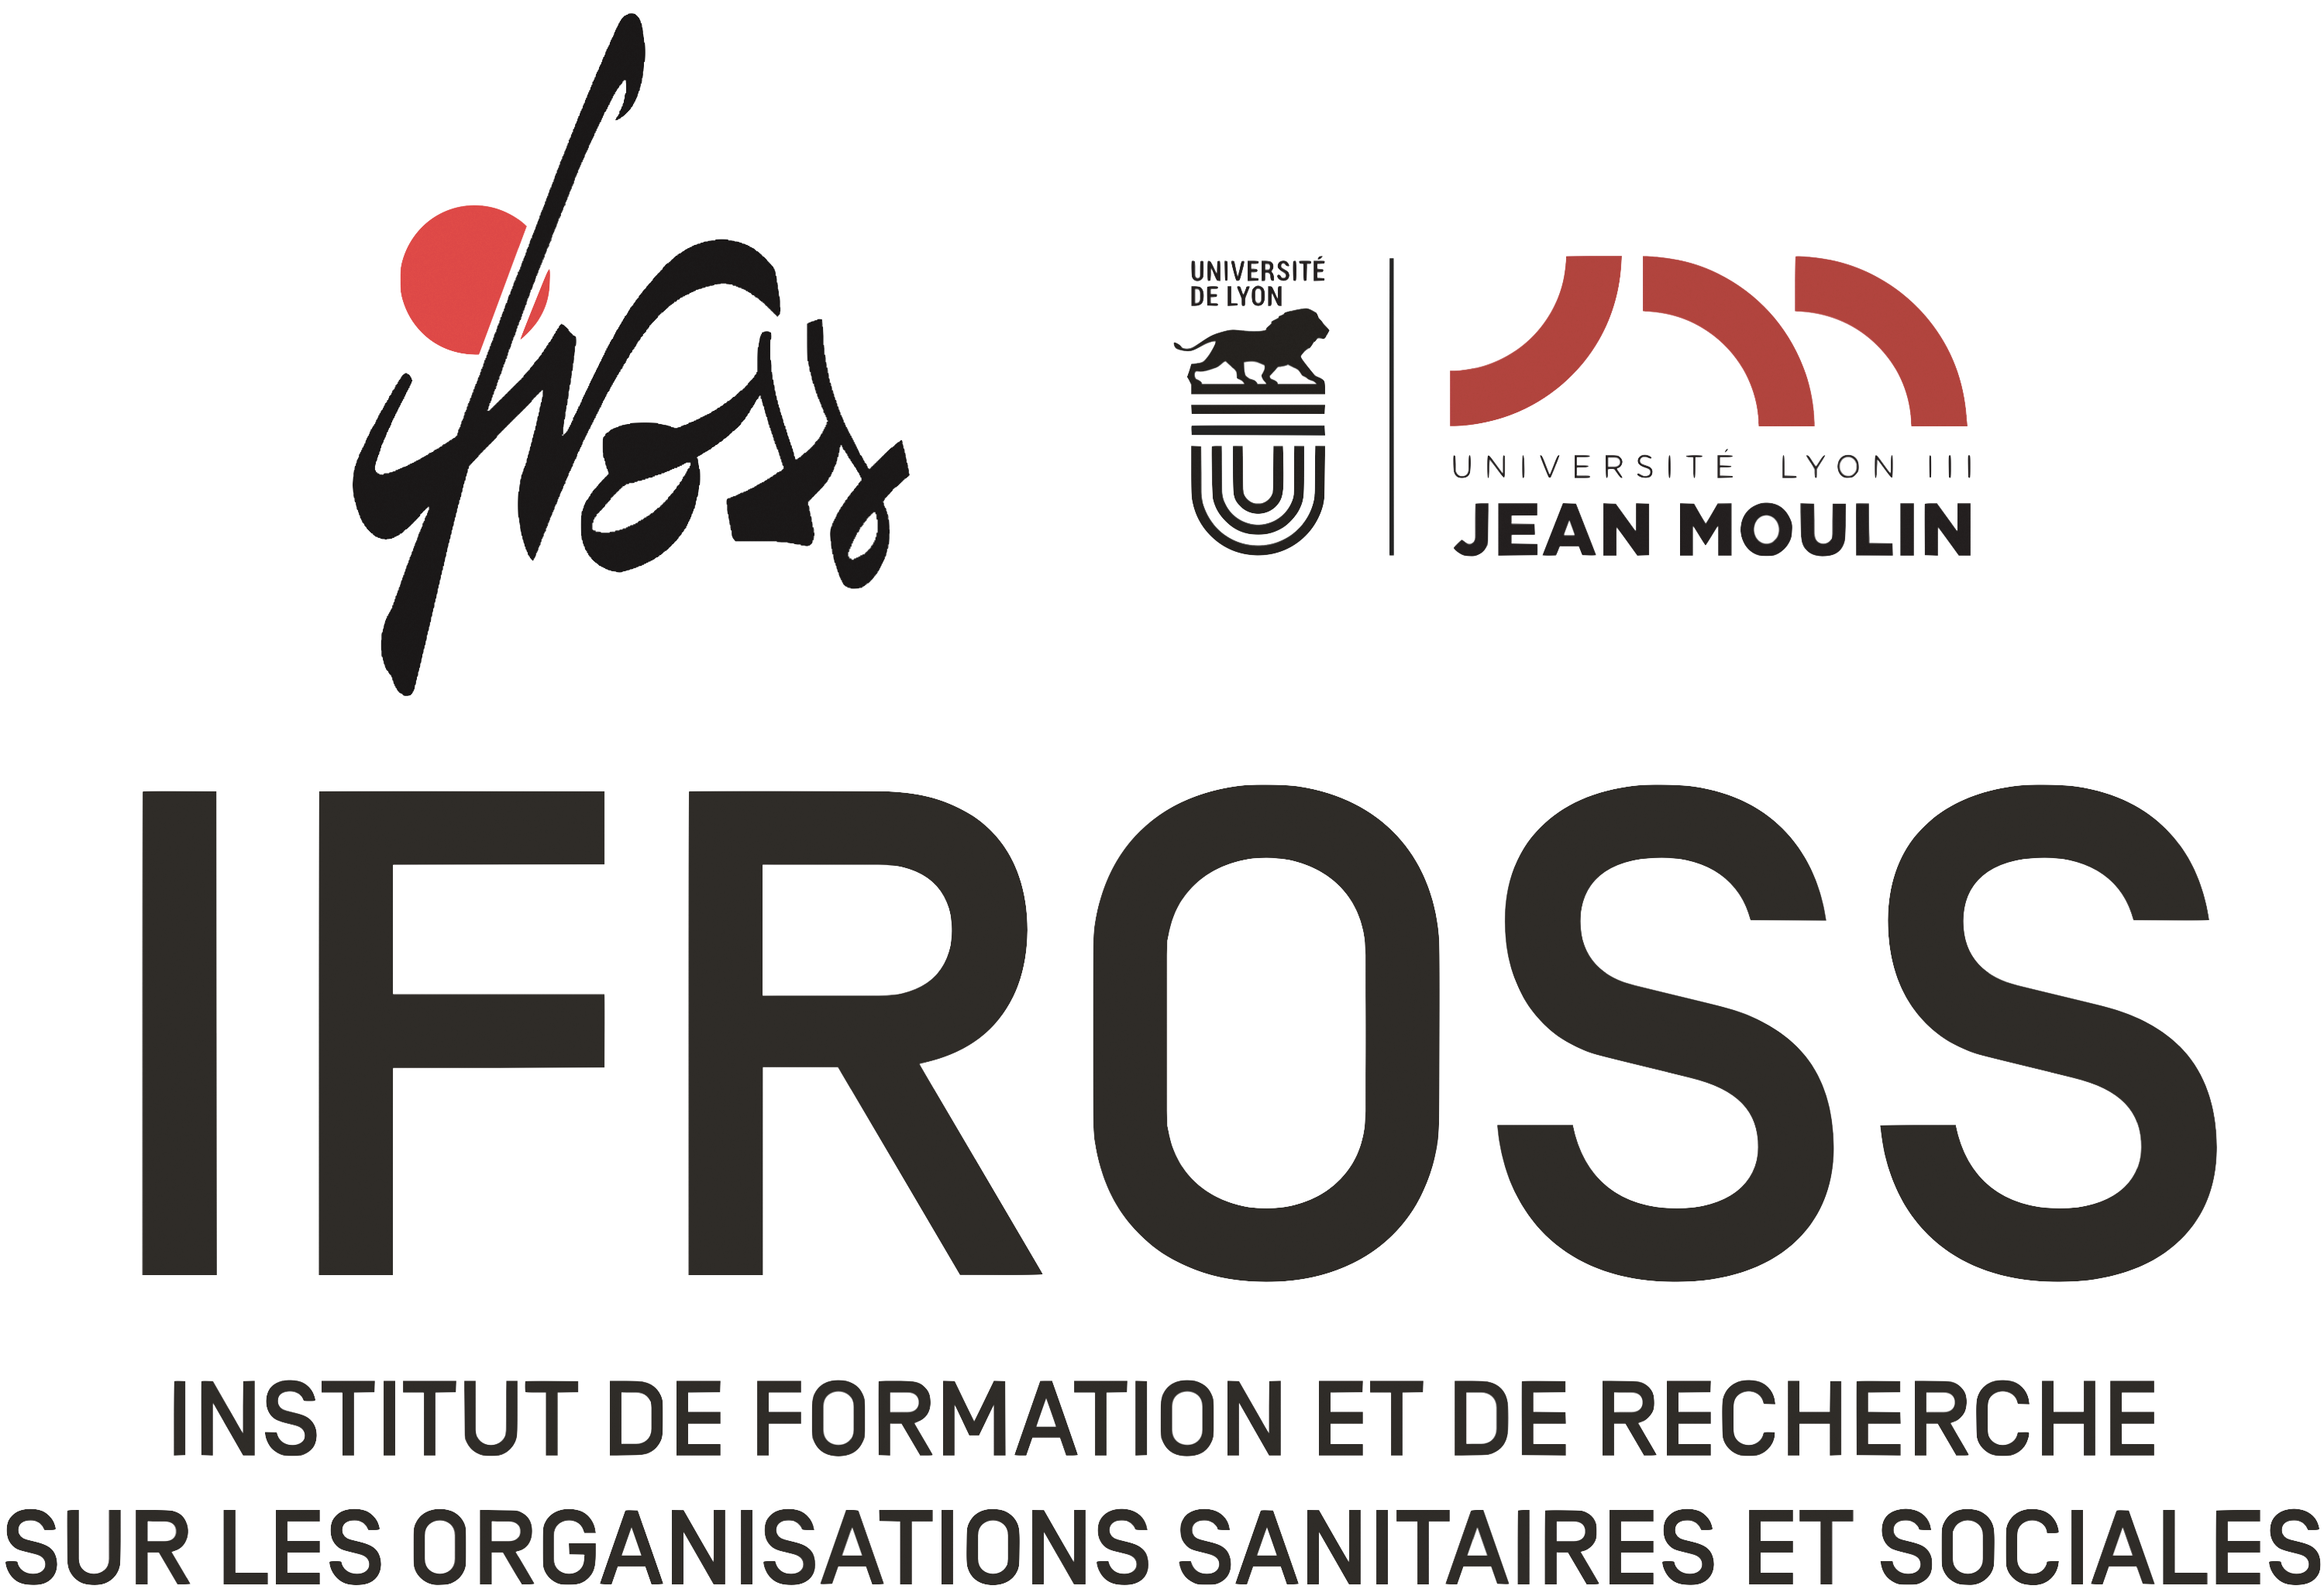 Logo Ifross